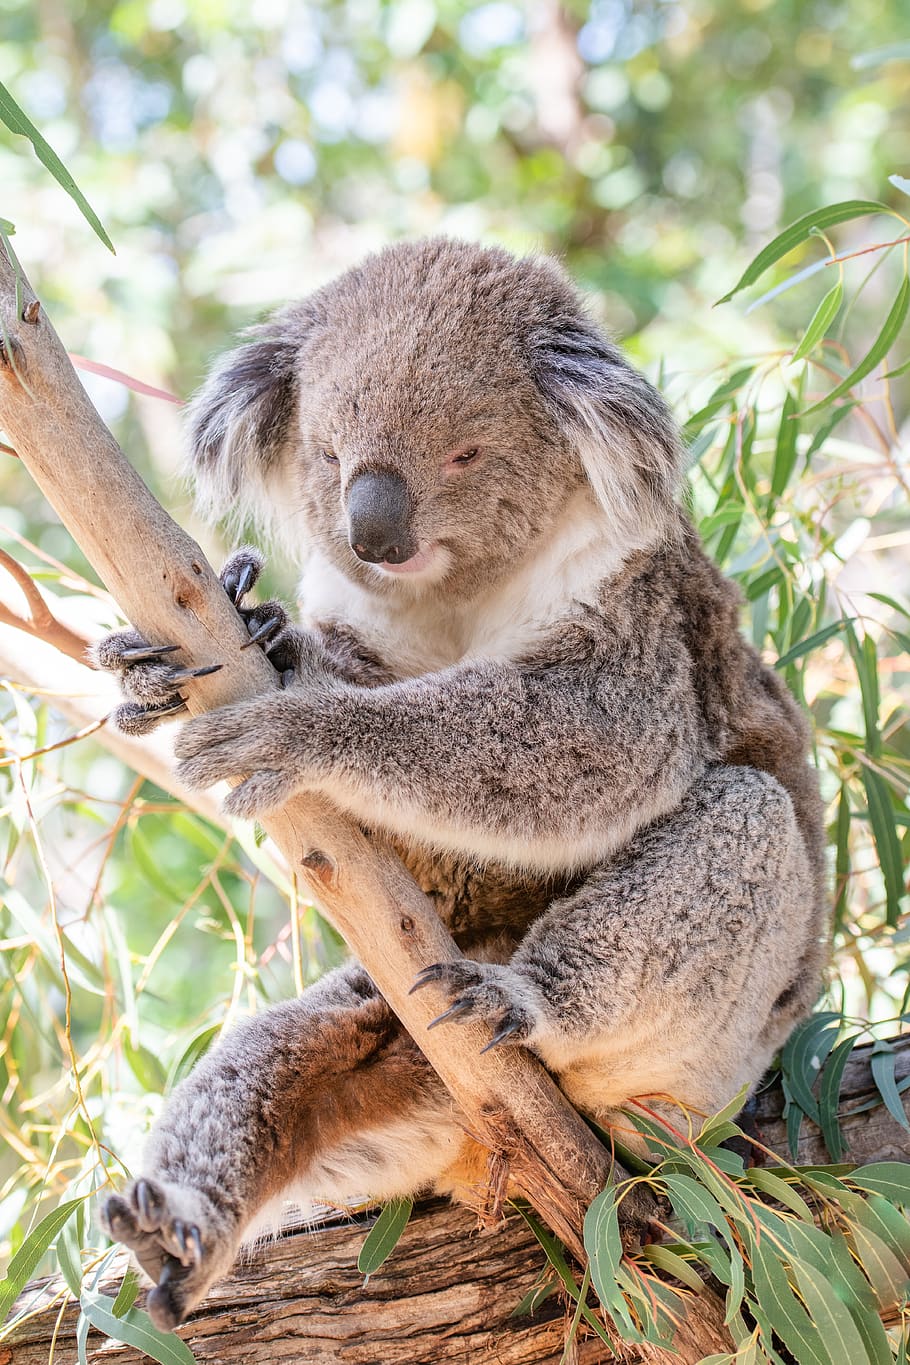 koala, marsupial, herbivore, arboreal, wildlife, australian, australia, animal, cute, nature